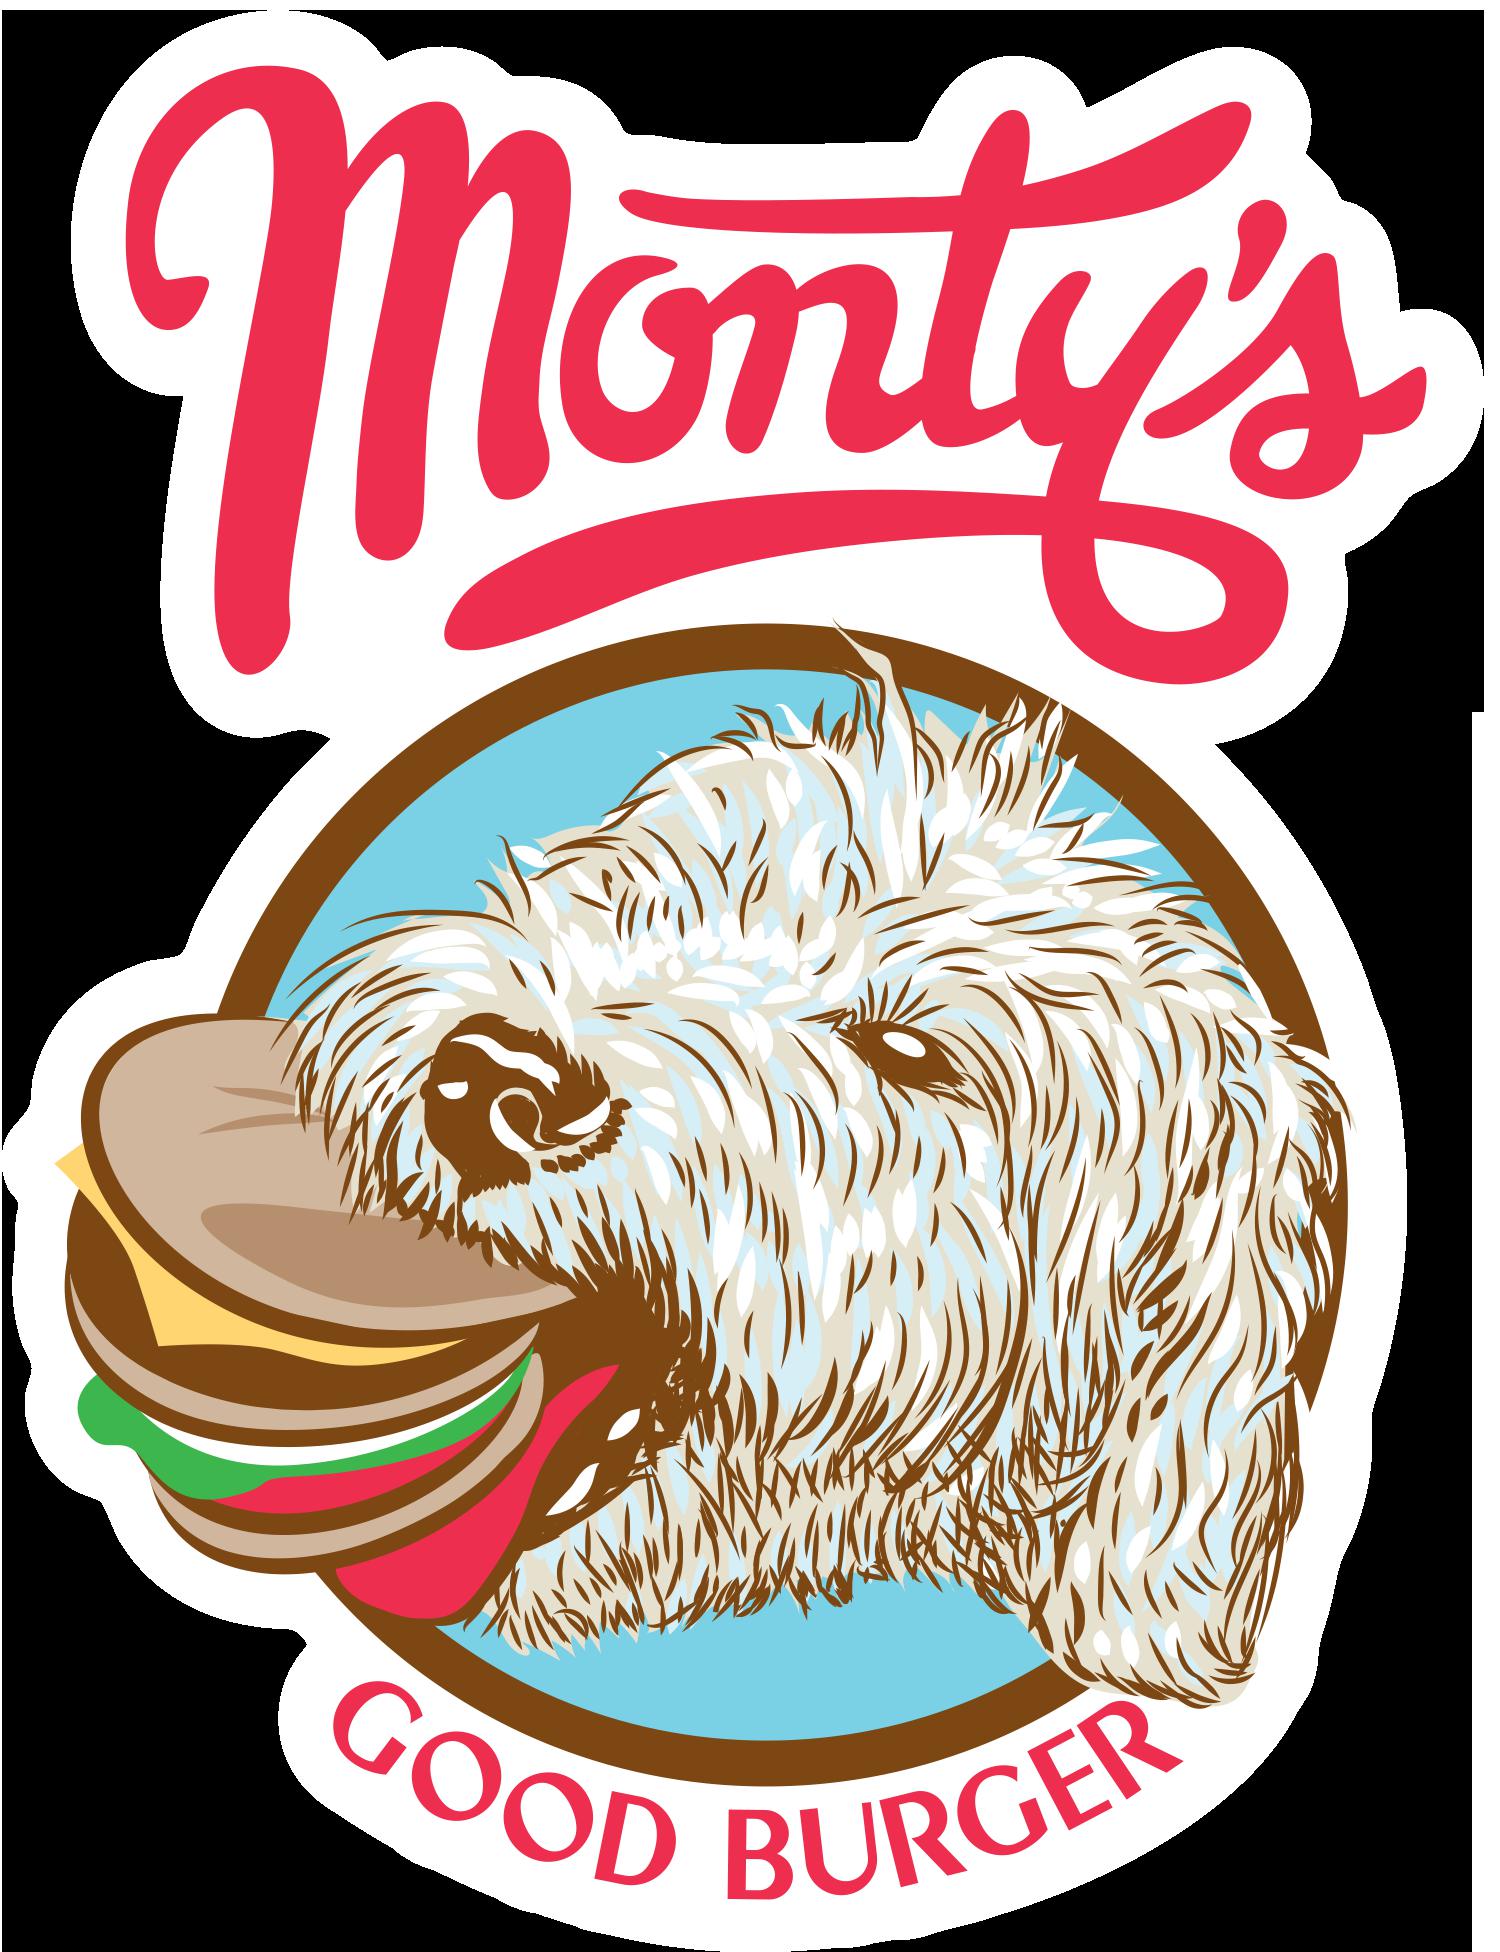 Monty's Good Burger - Echo Park Los Angeles